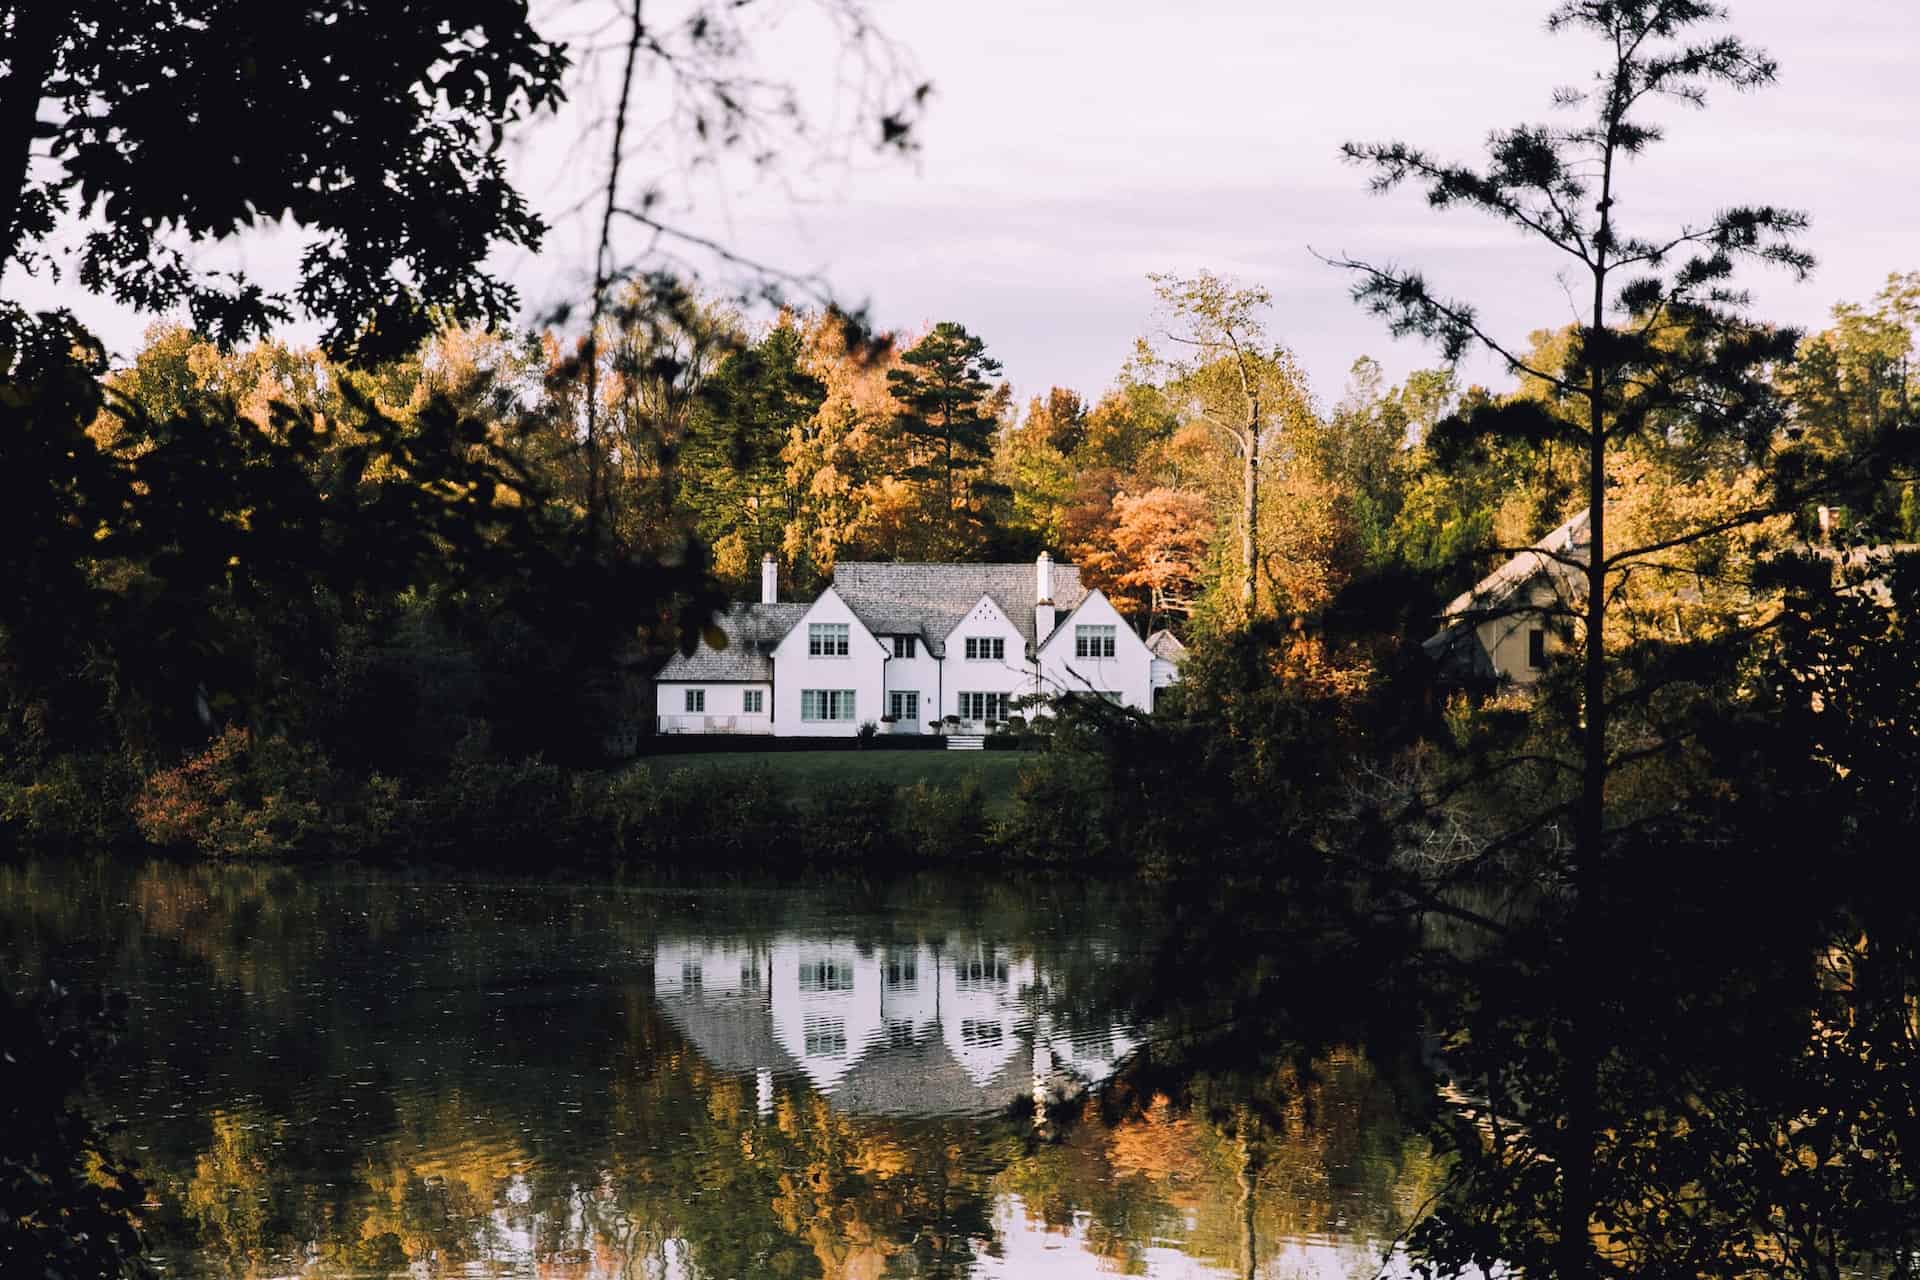 Best things to do in Greensboro NC - Beau Wigington - Hamilton Lakes Park by Emma Frances Logan on Unsplash